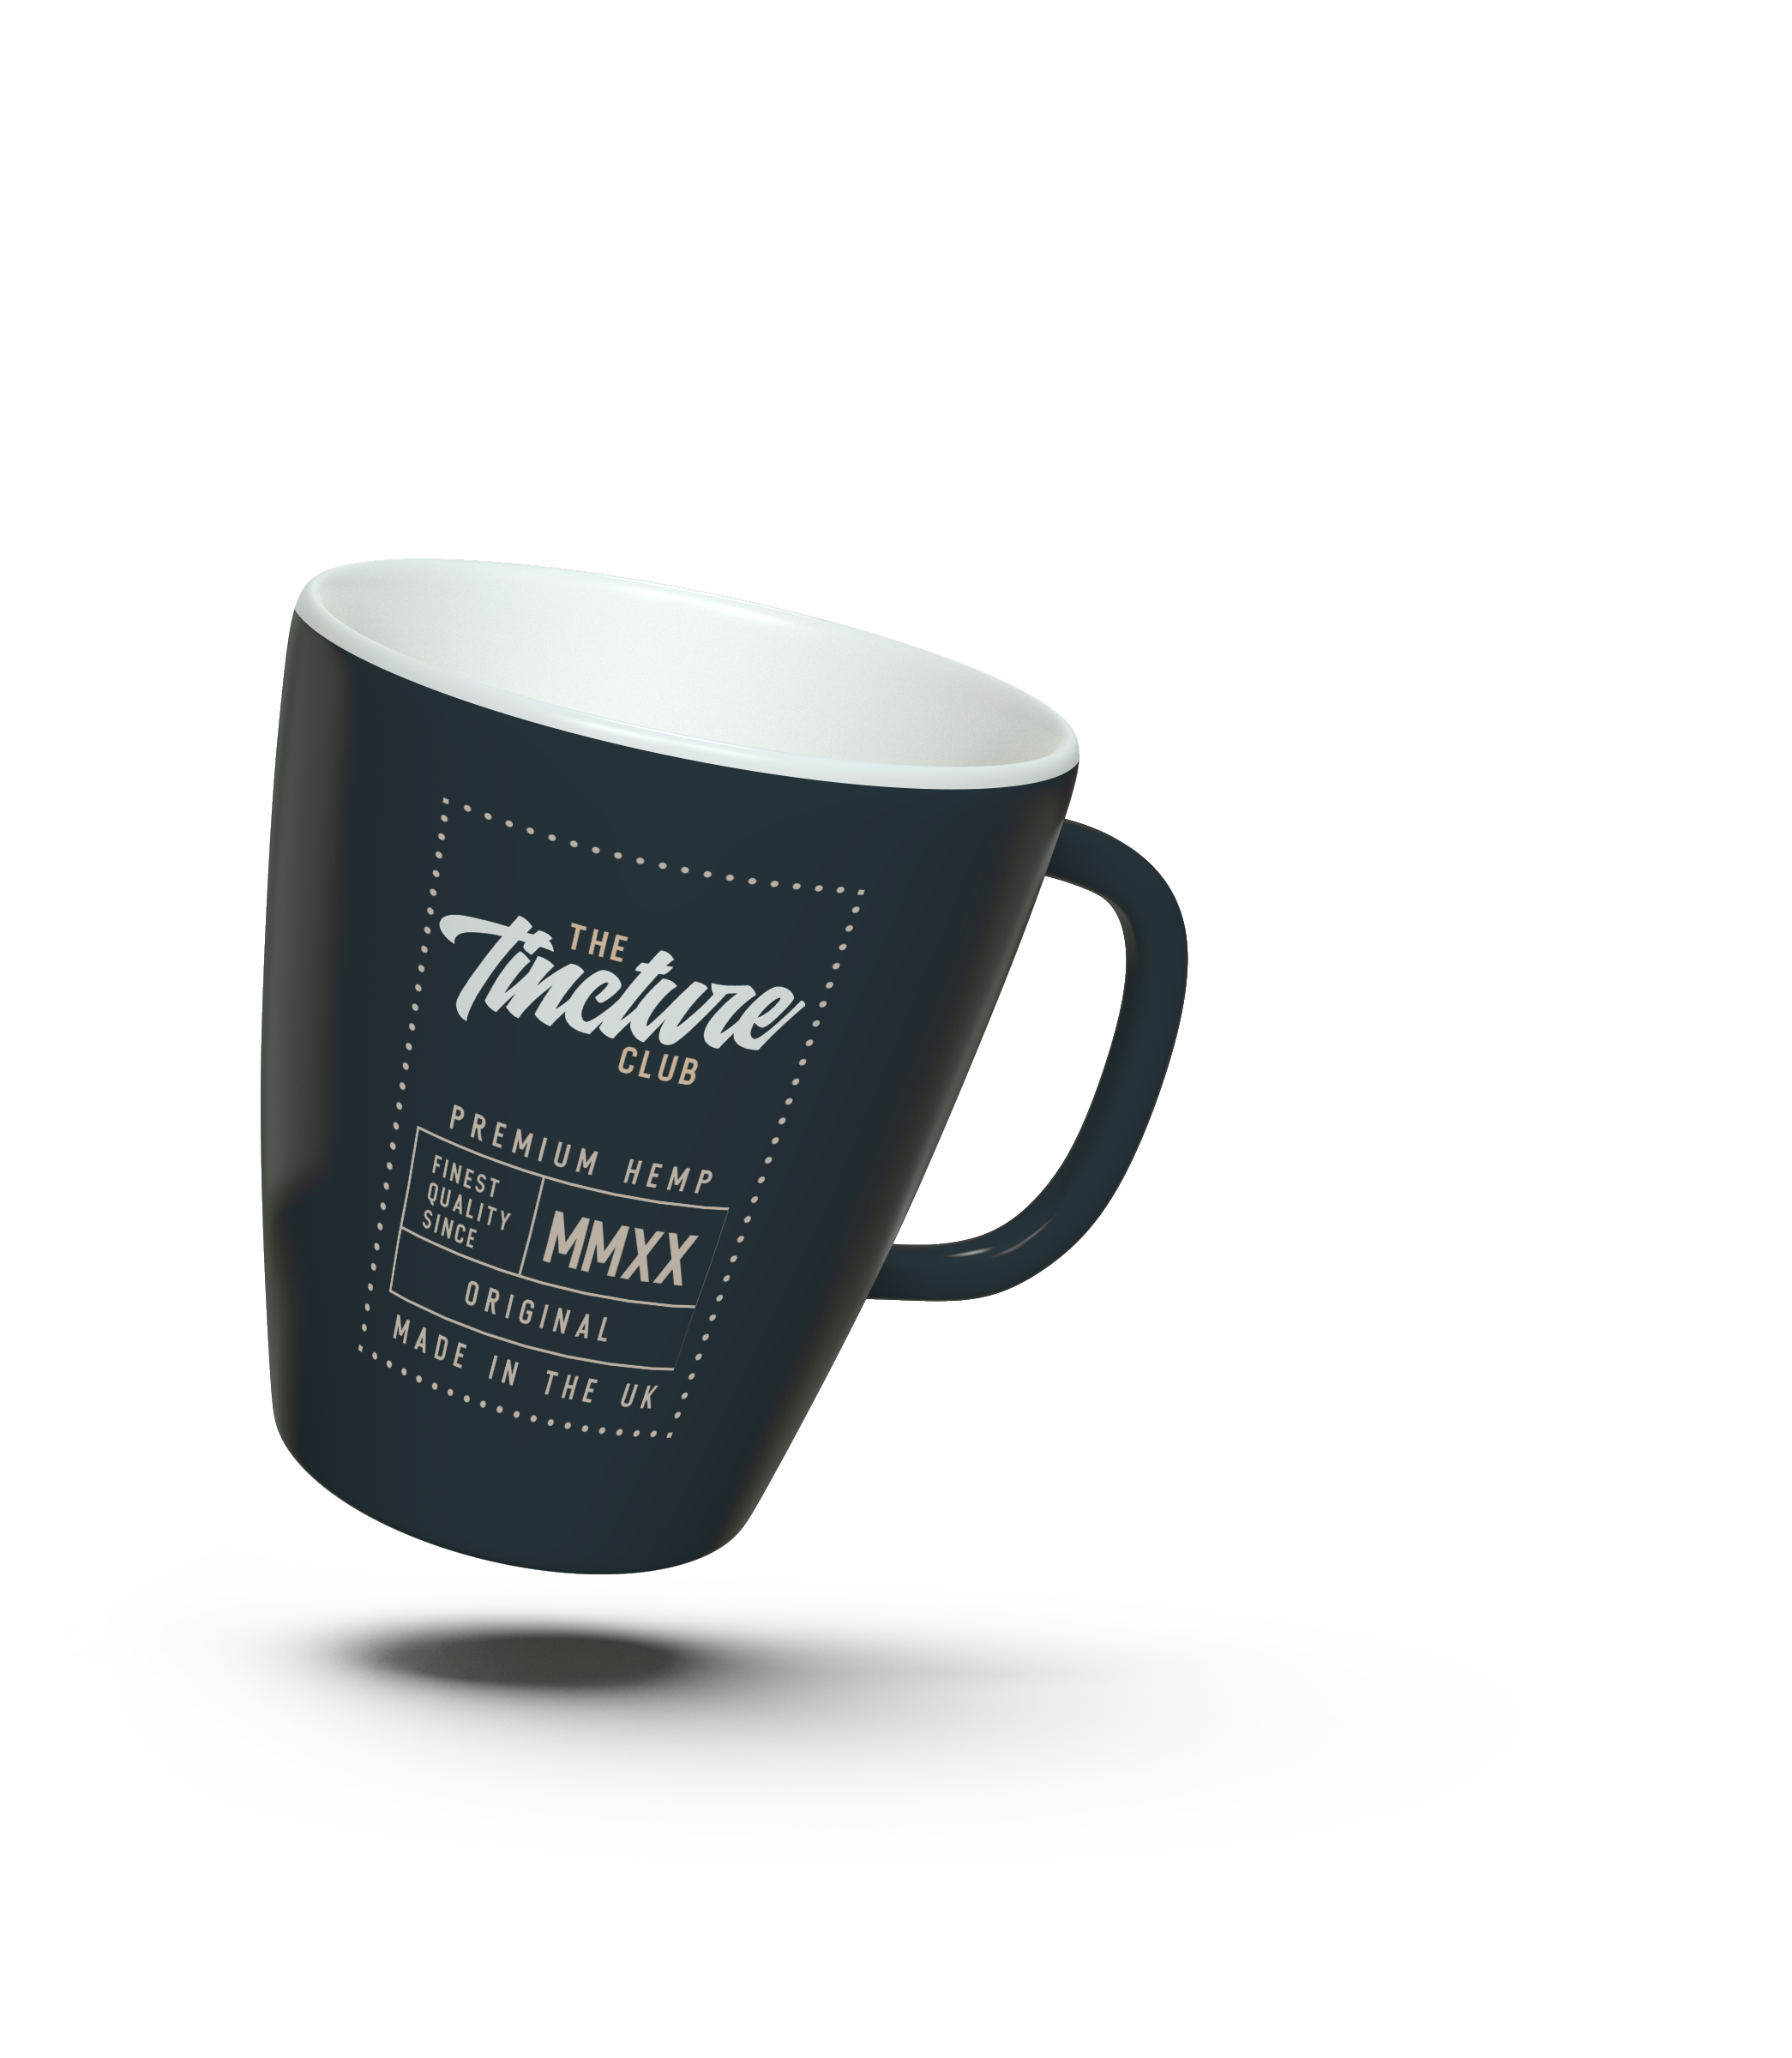 A mug branding design for The tincture club at Cardboard Creative